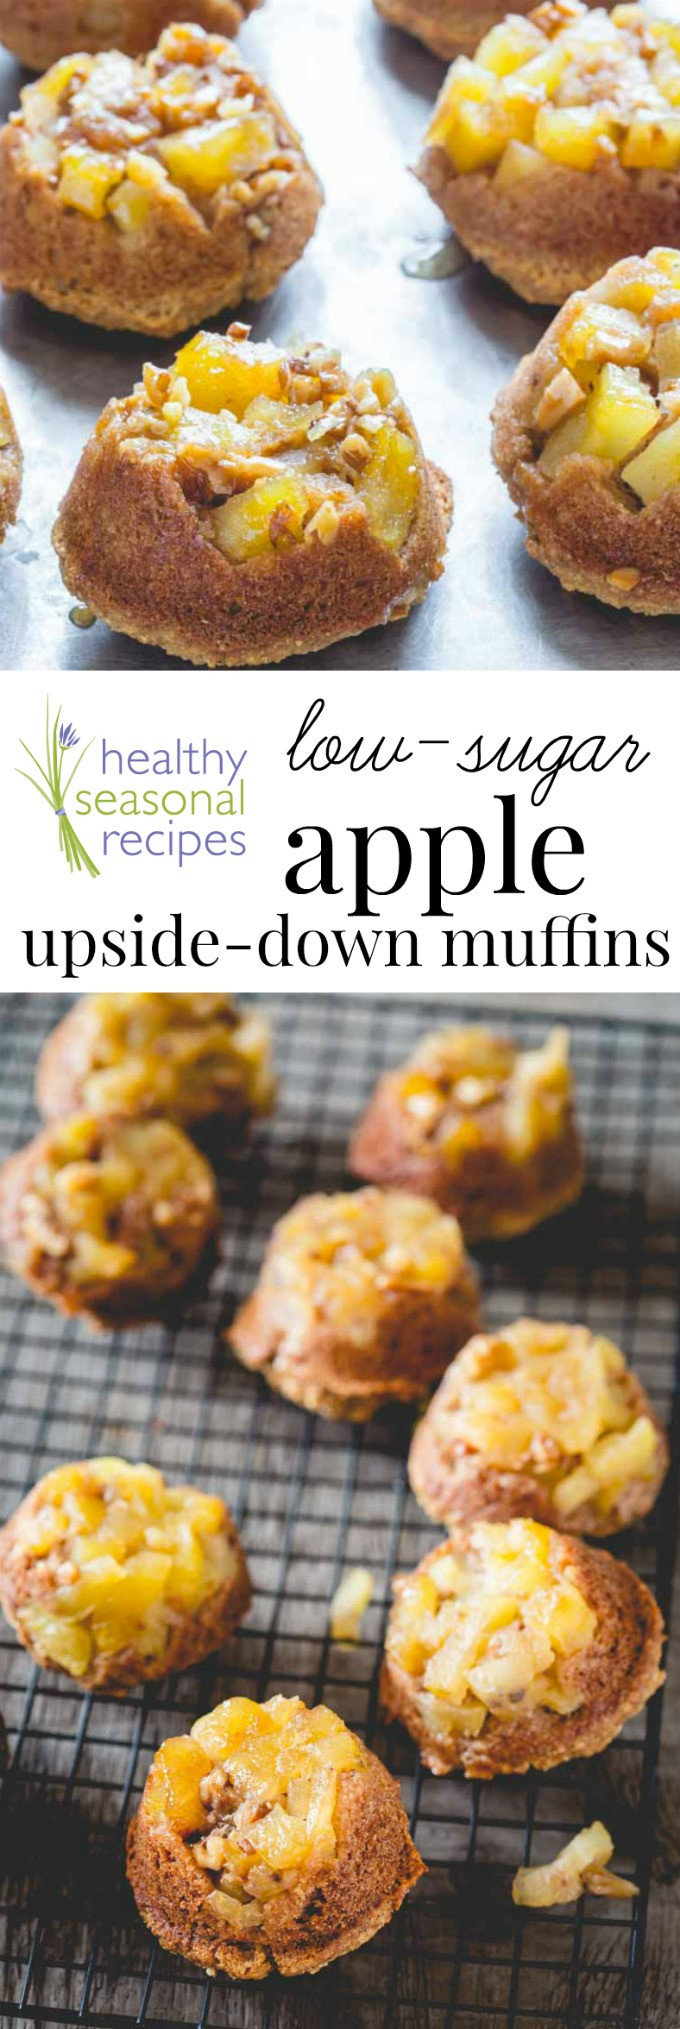 Healthy Applesauce Muffins No Sugar
 low sugar apple upside down muffins Healthy Seasonal Recipes